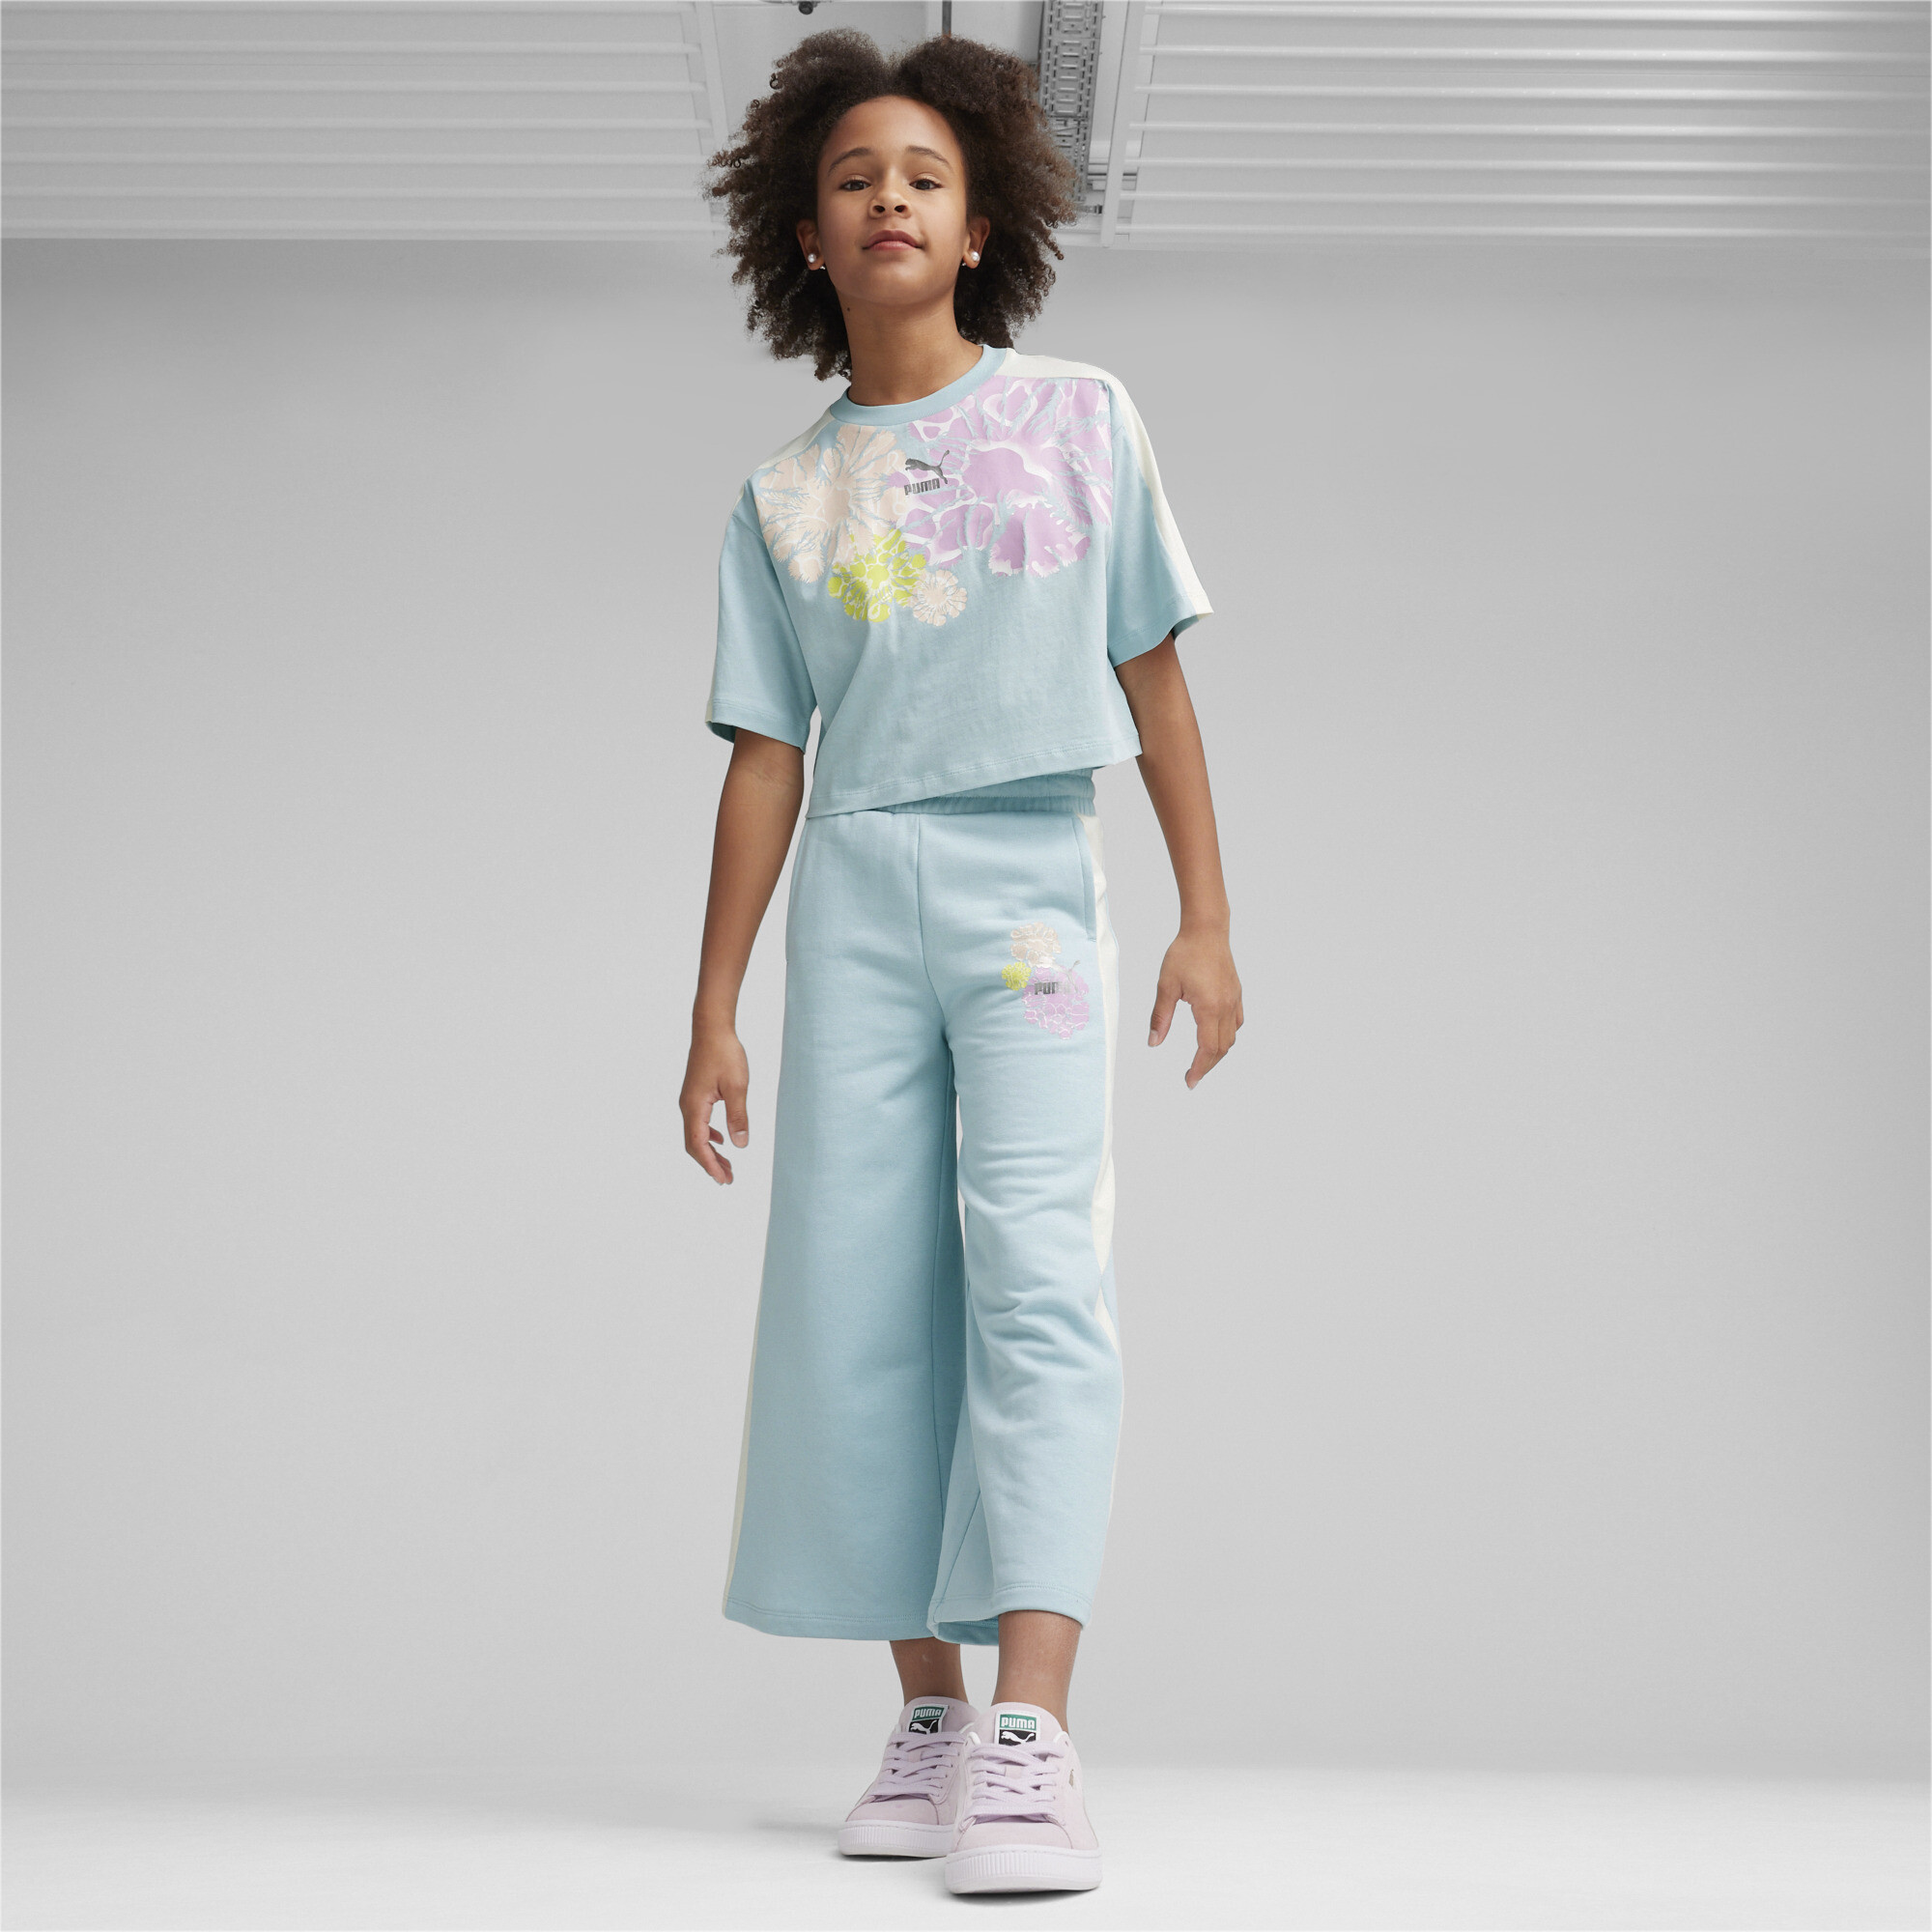 Puma T7 SNFLR Girls' Graphic T-Shirt, Blue, Size 9-10Y, Age